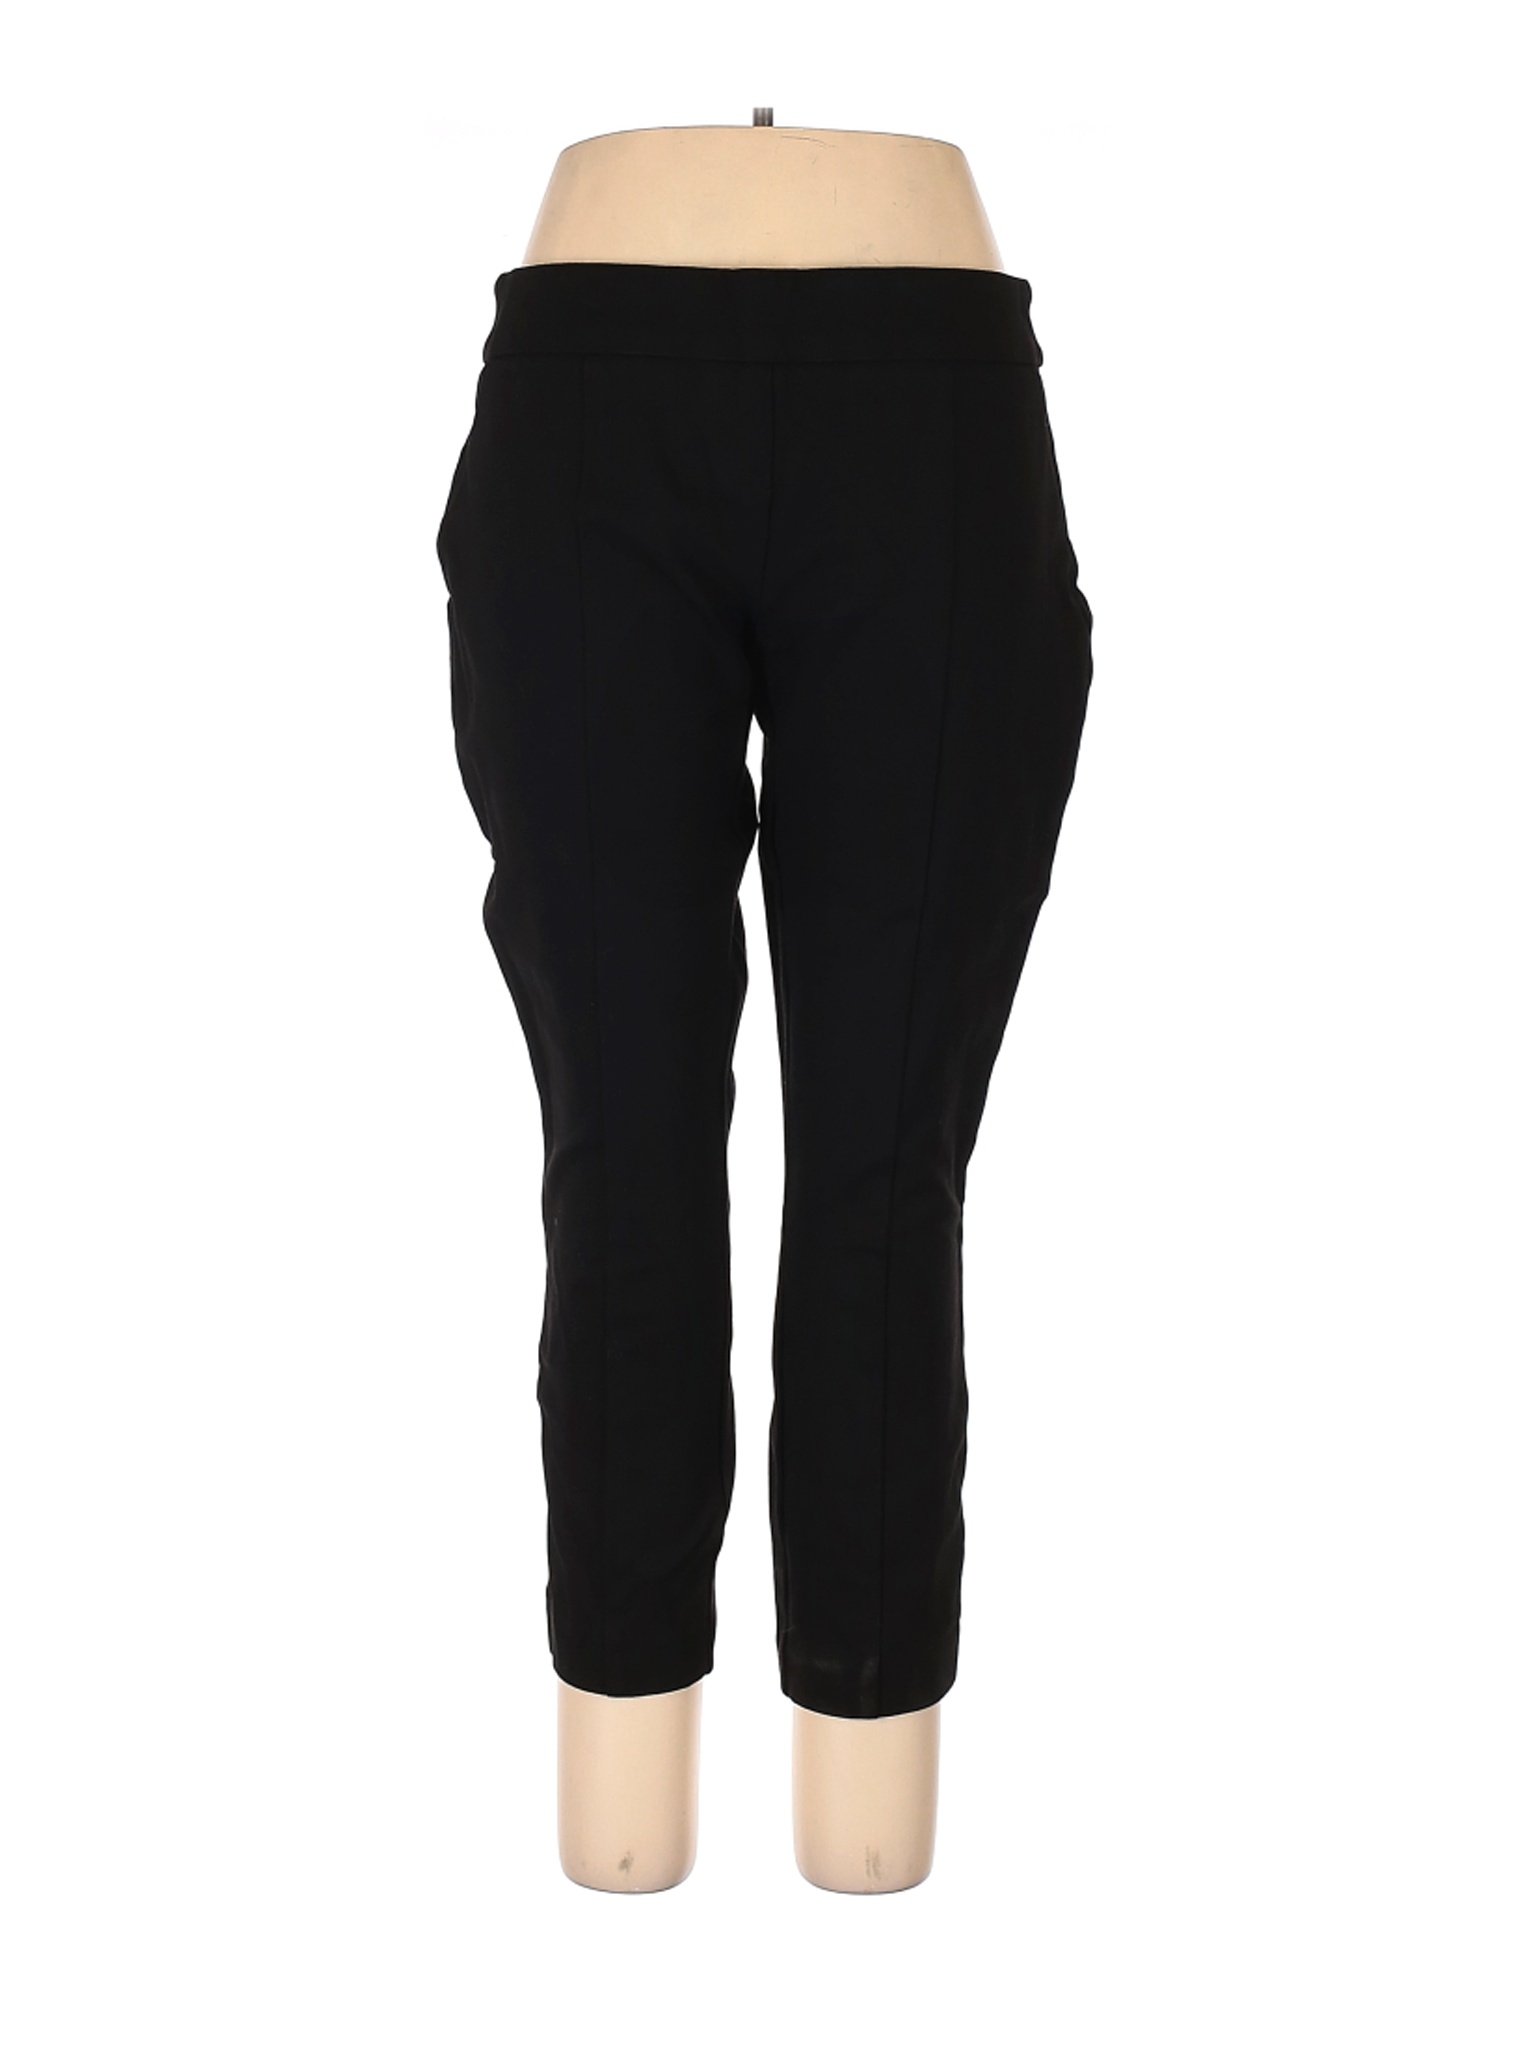 Hilary Radley Women Black Casual Pants XL | eBay